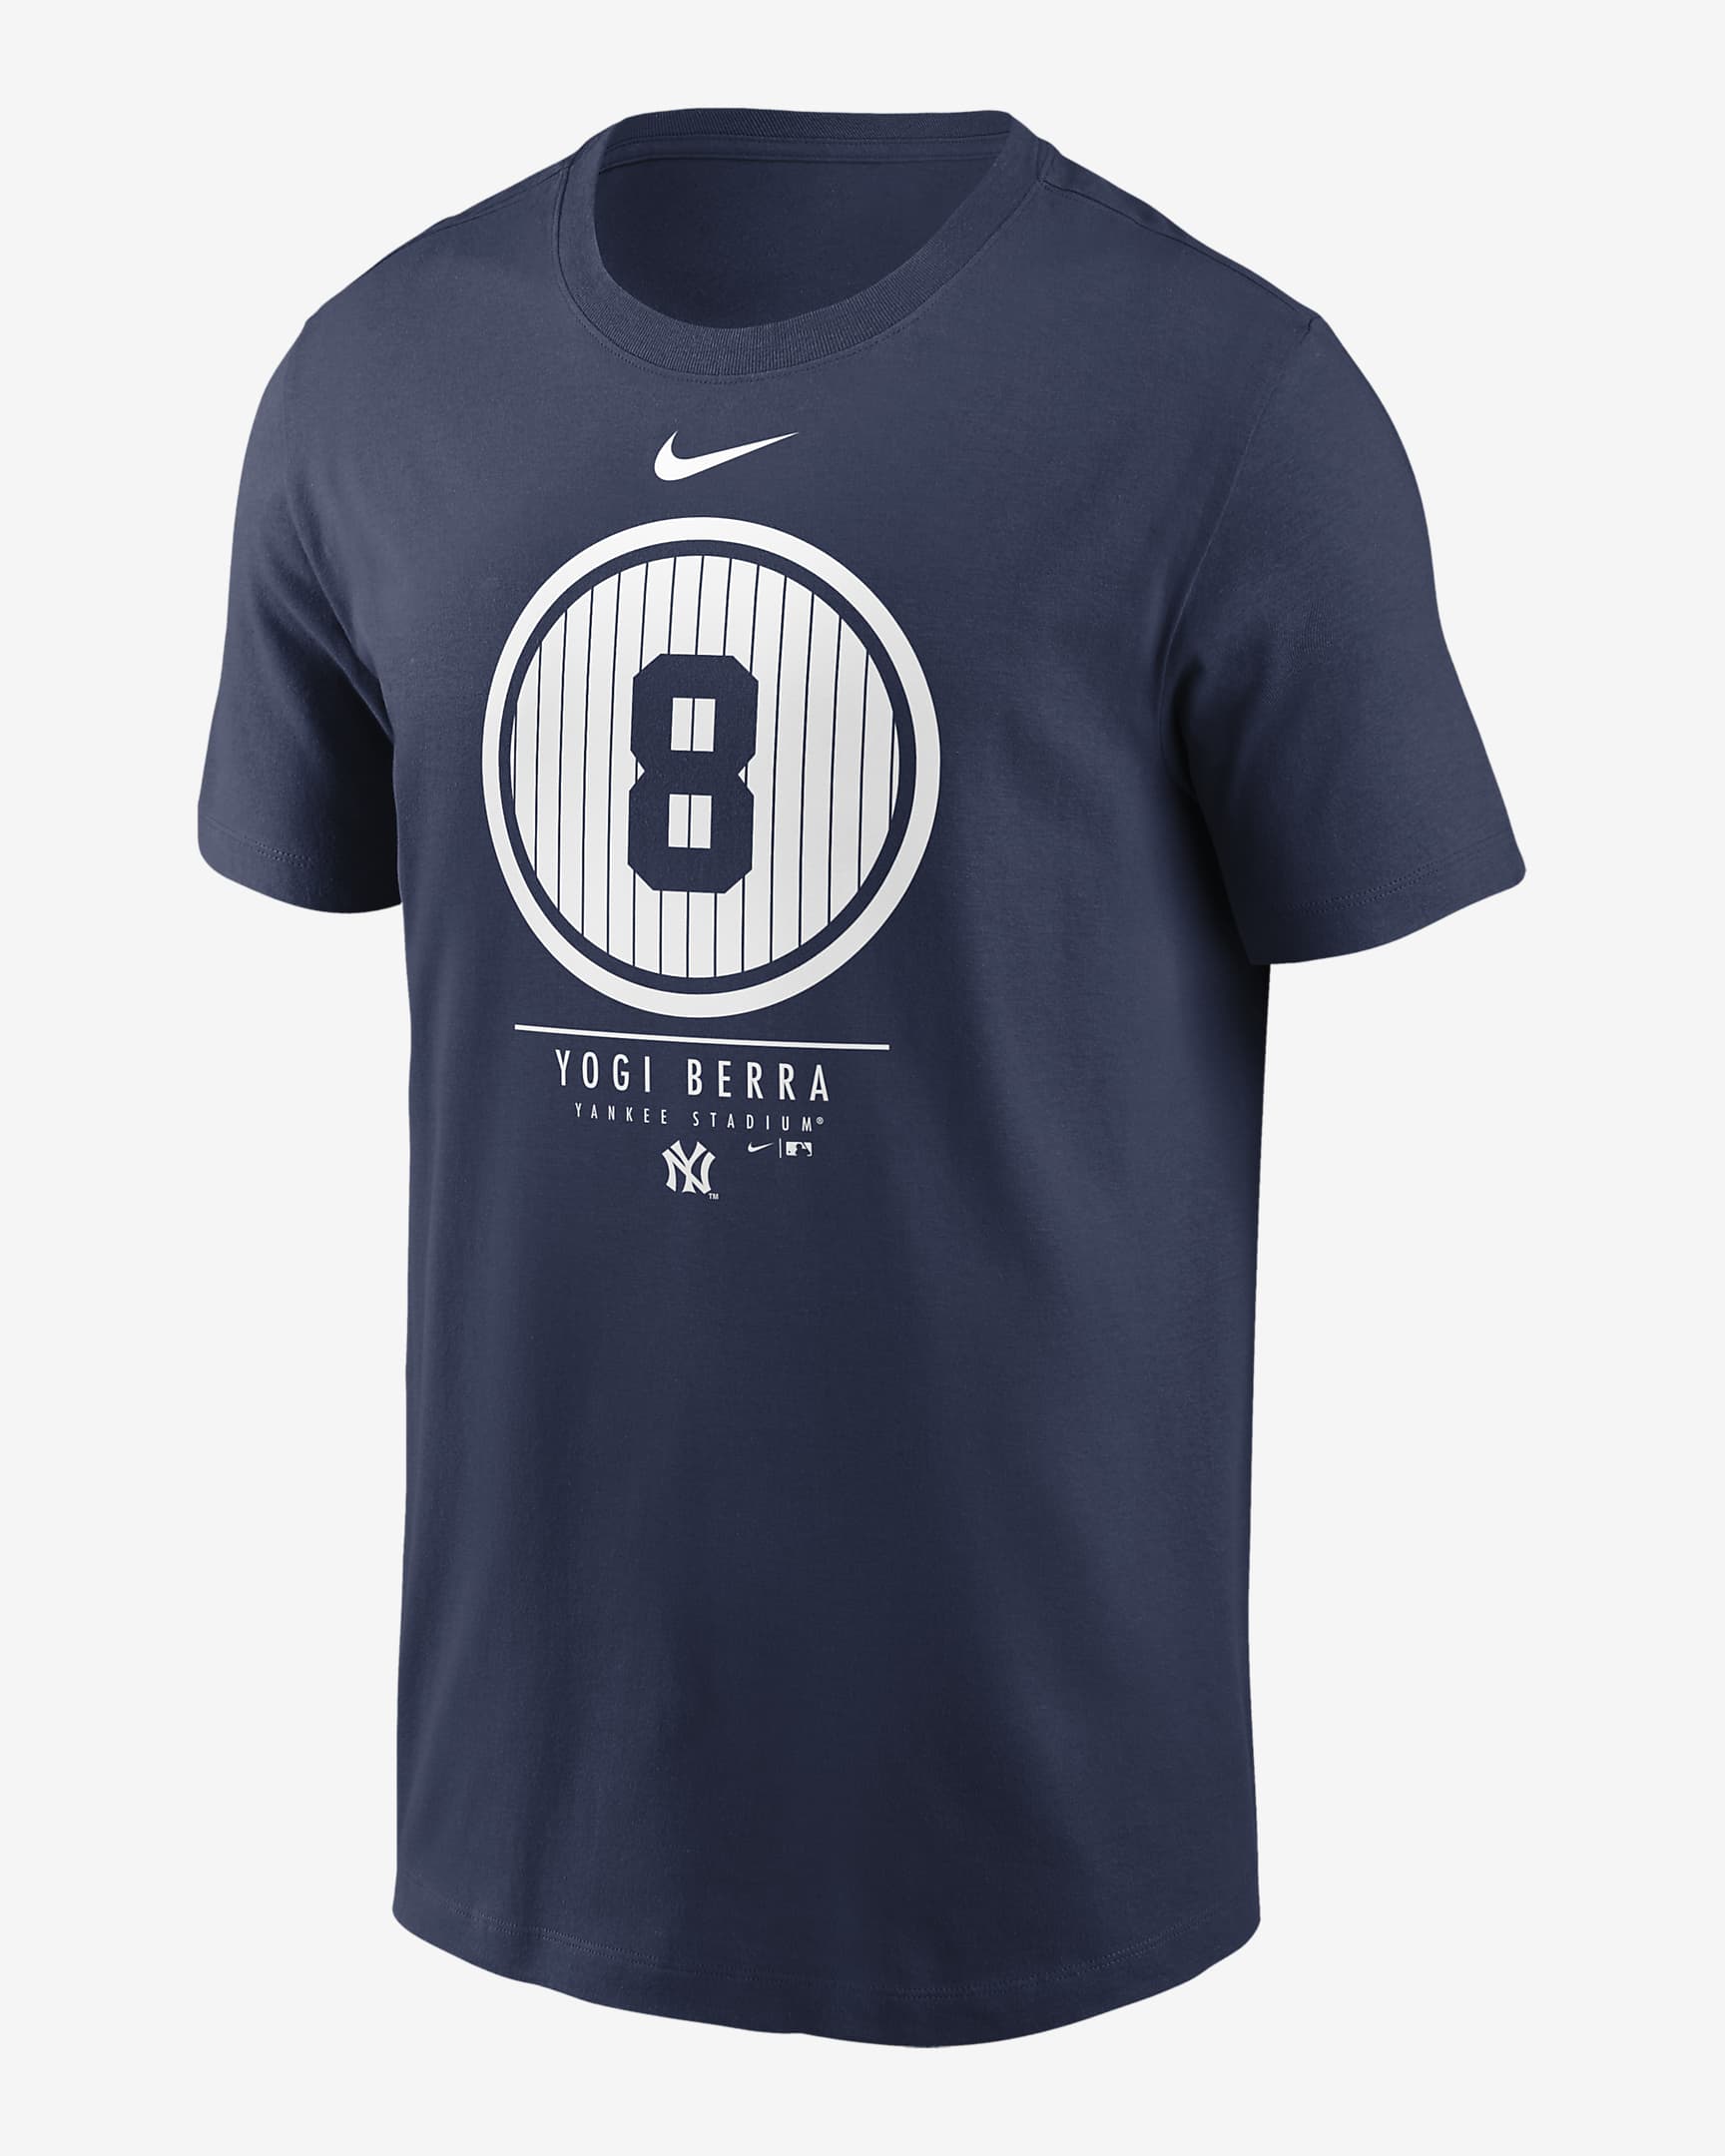 MLB New York Yankees (Yogi Berra) Men's T-Shirt. Nike.com